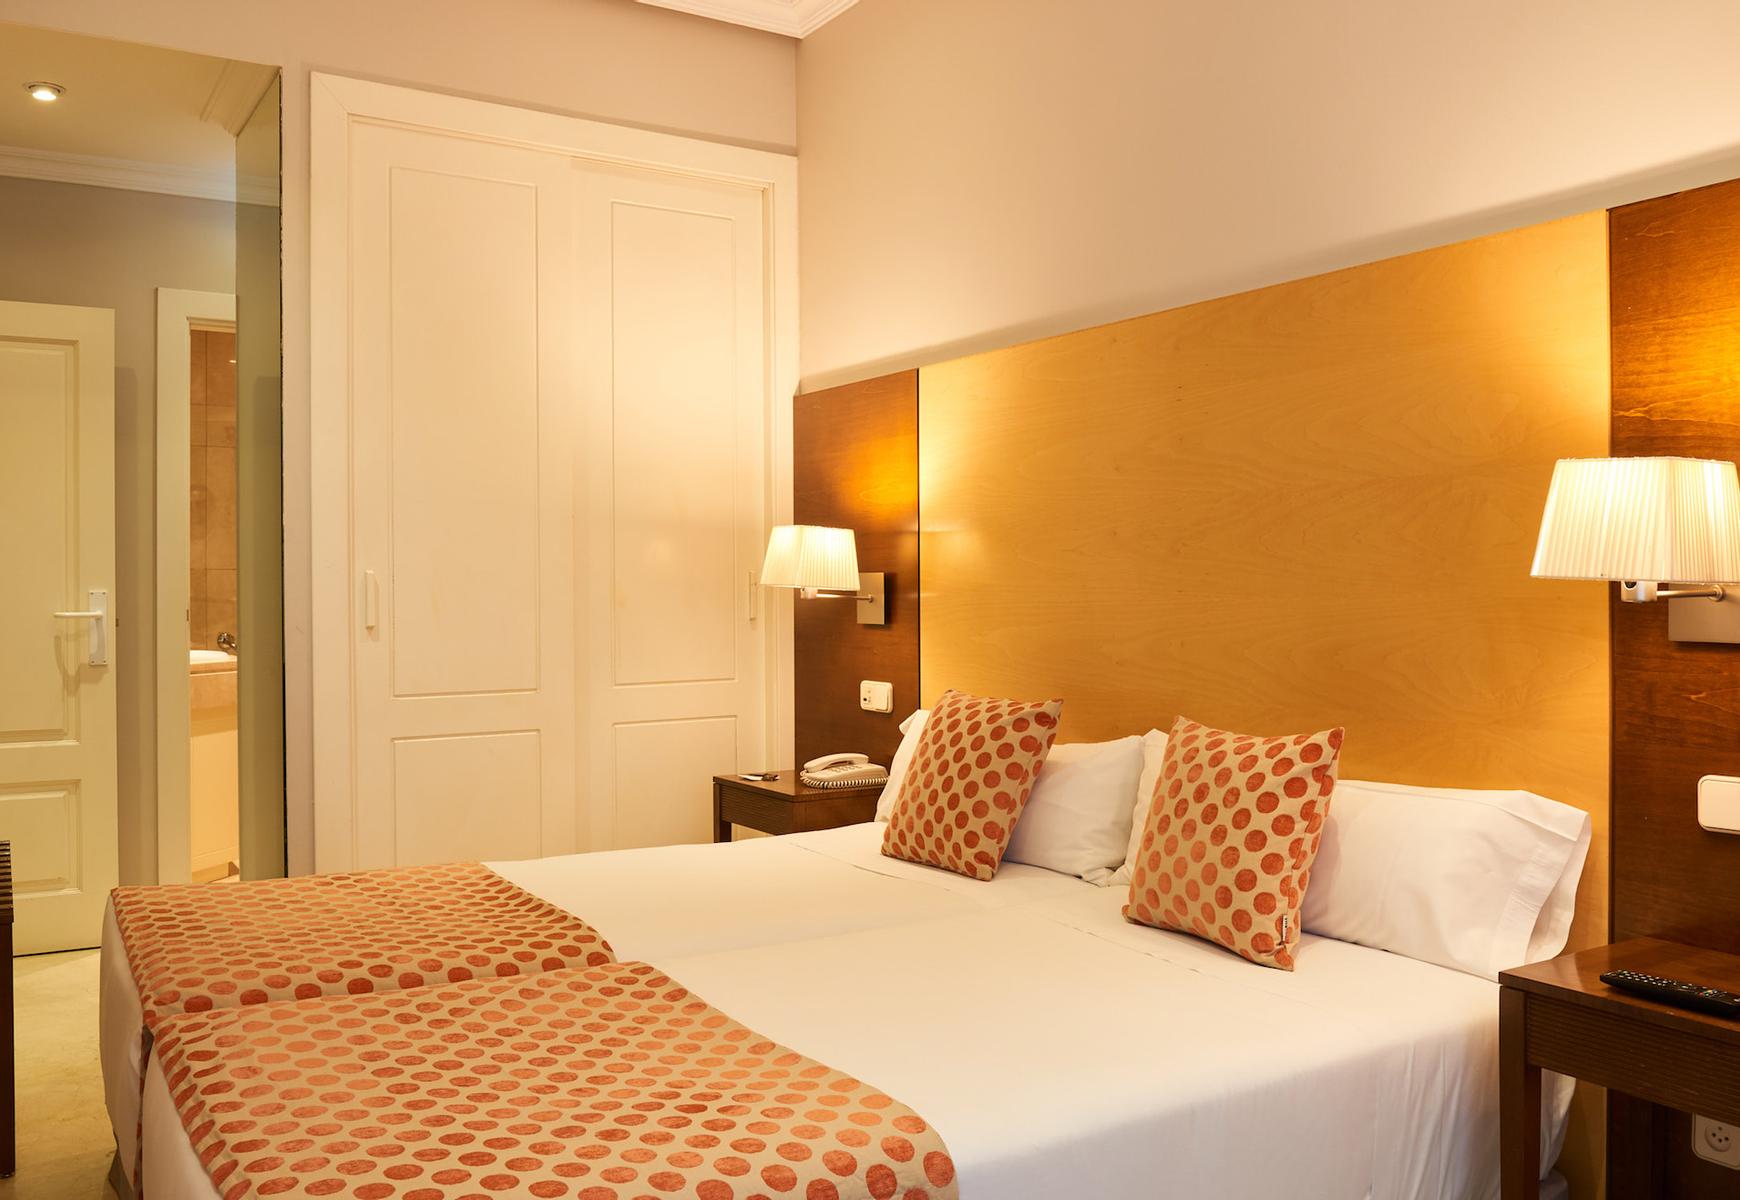 Hotel Suites Barrio de Salamanca | Madrid | Accommodation 04 - 1